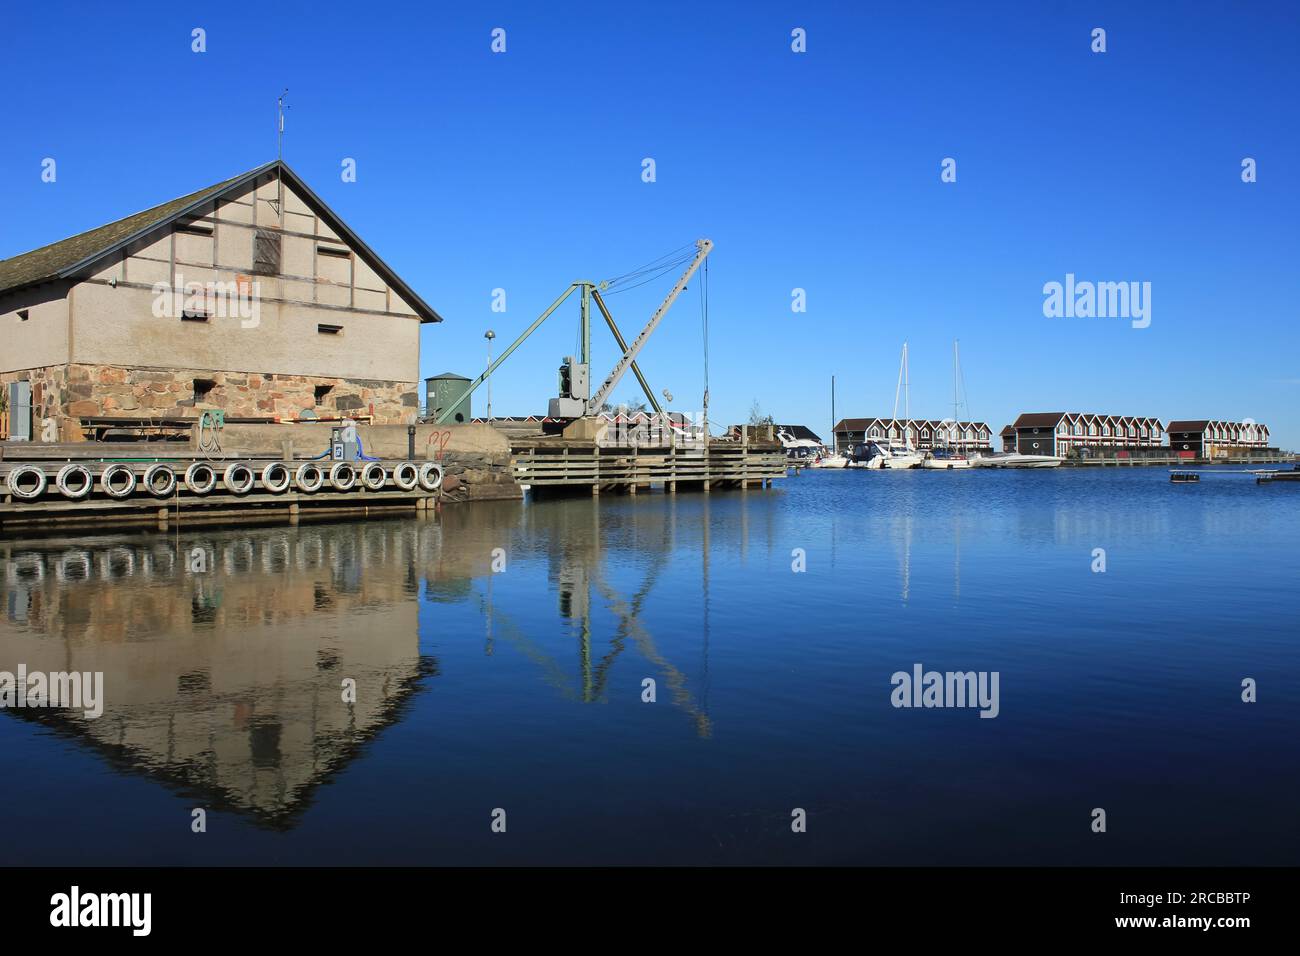 Sunnana hamn, harbour in Mellerud, Sweden Stock Photo